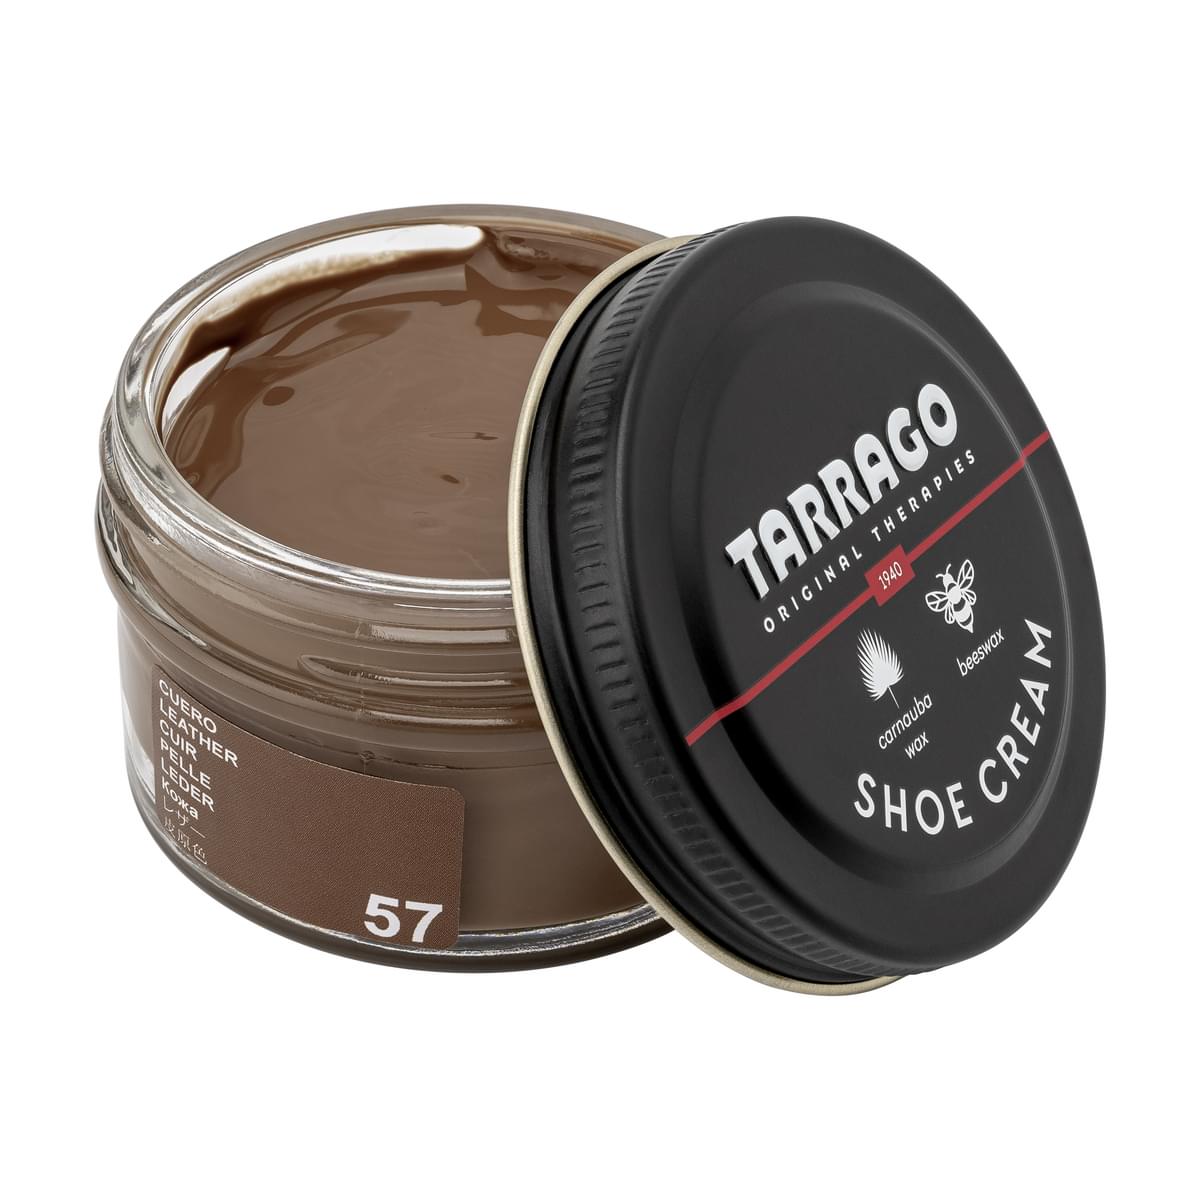 Tarrago Shoe Cream  - Leather - 57